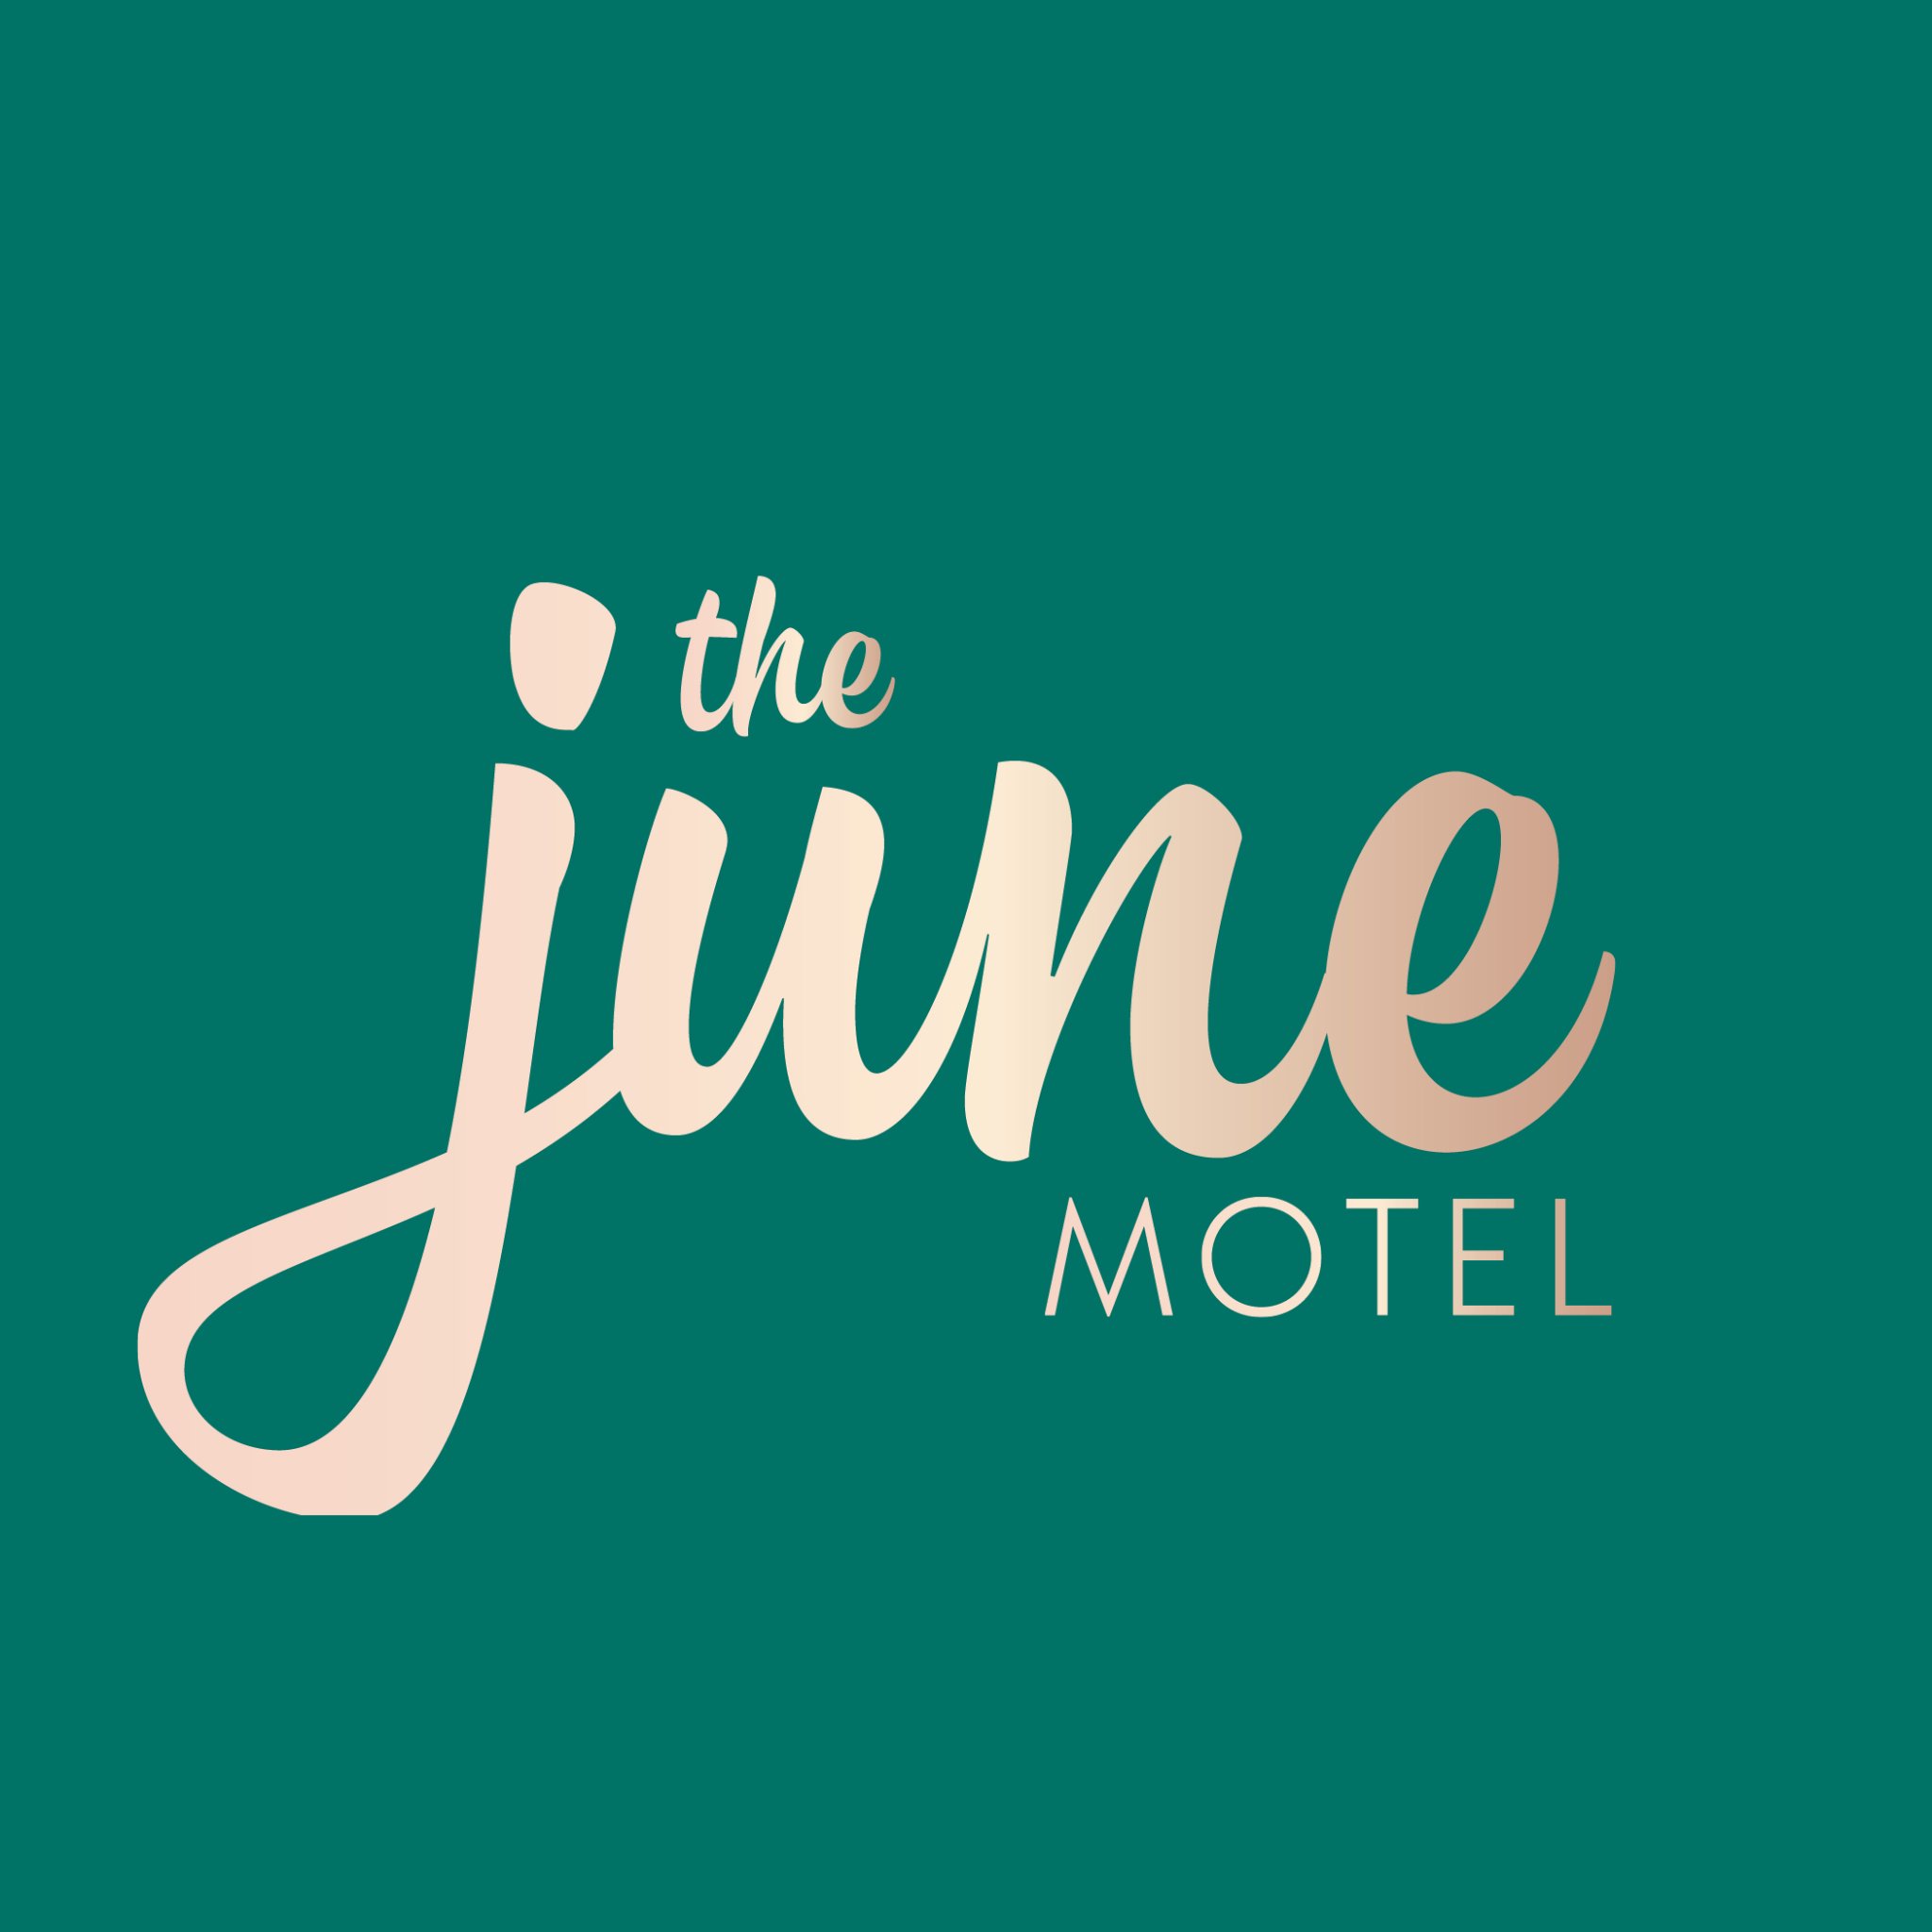 The June Motel